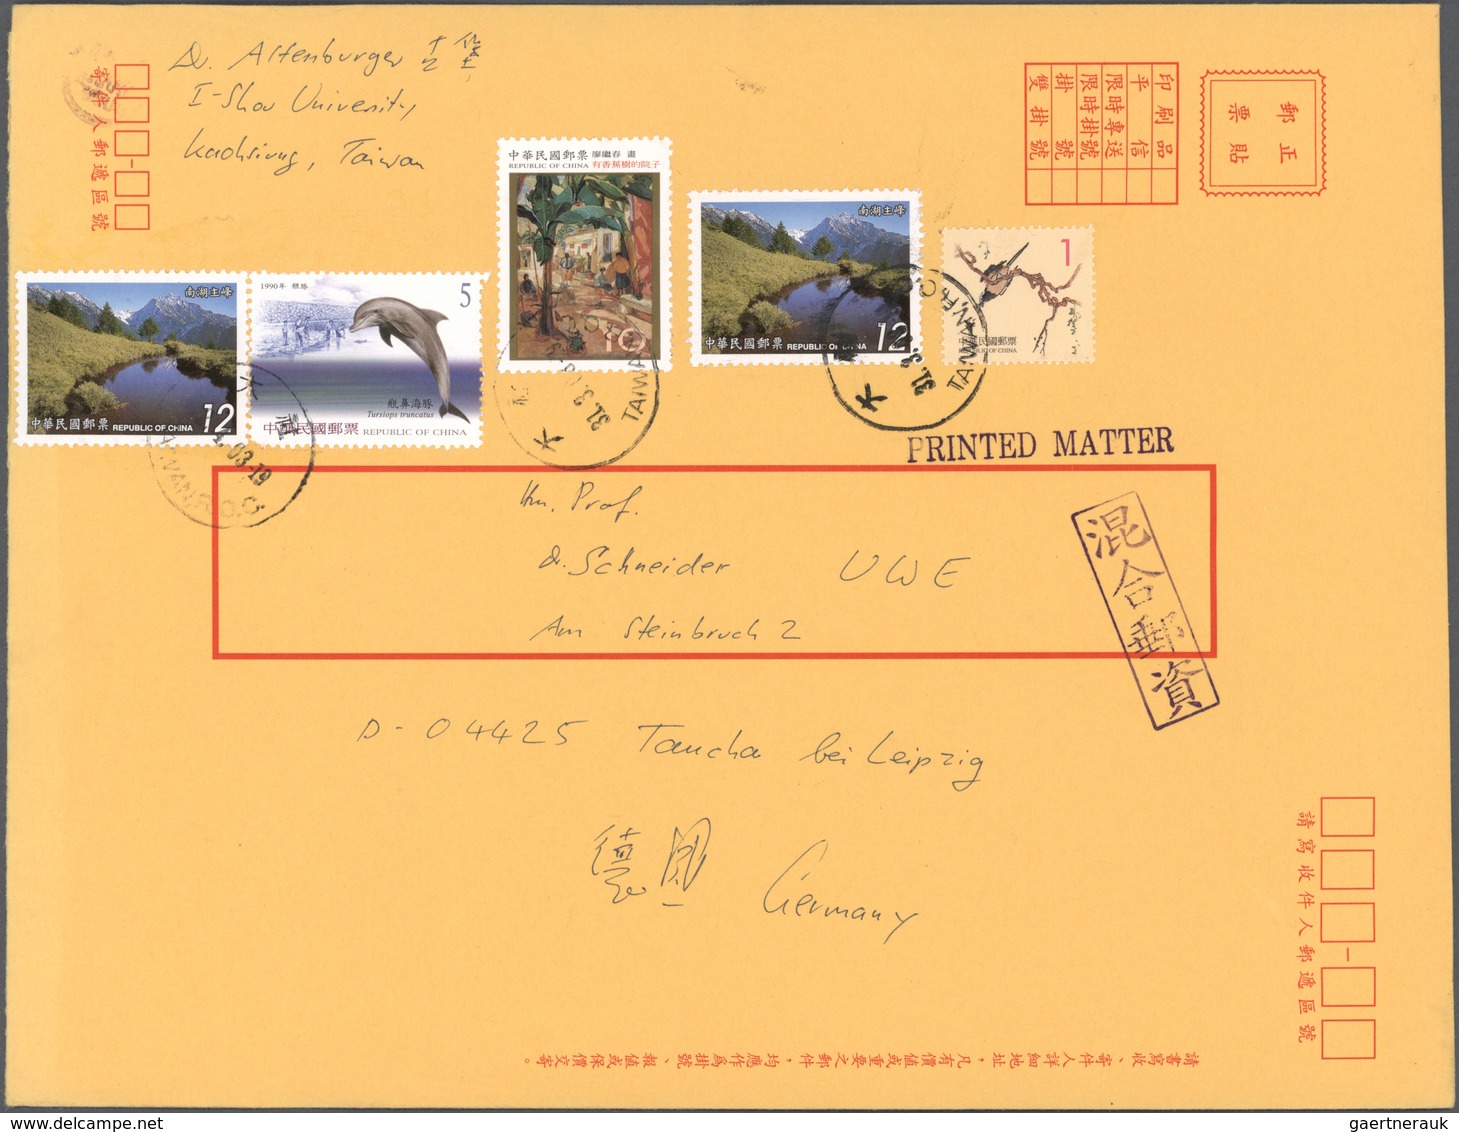 China - Volksrepublik: 1960/90 (ca.) Lot of ca. 100 envelopes (often Banc of China sent to Europe),